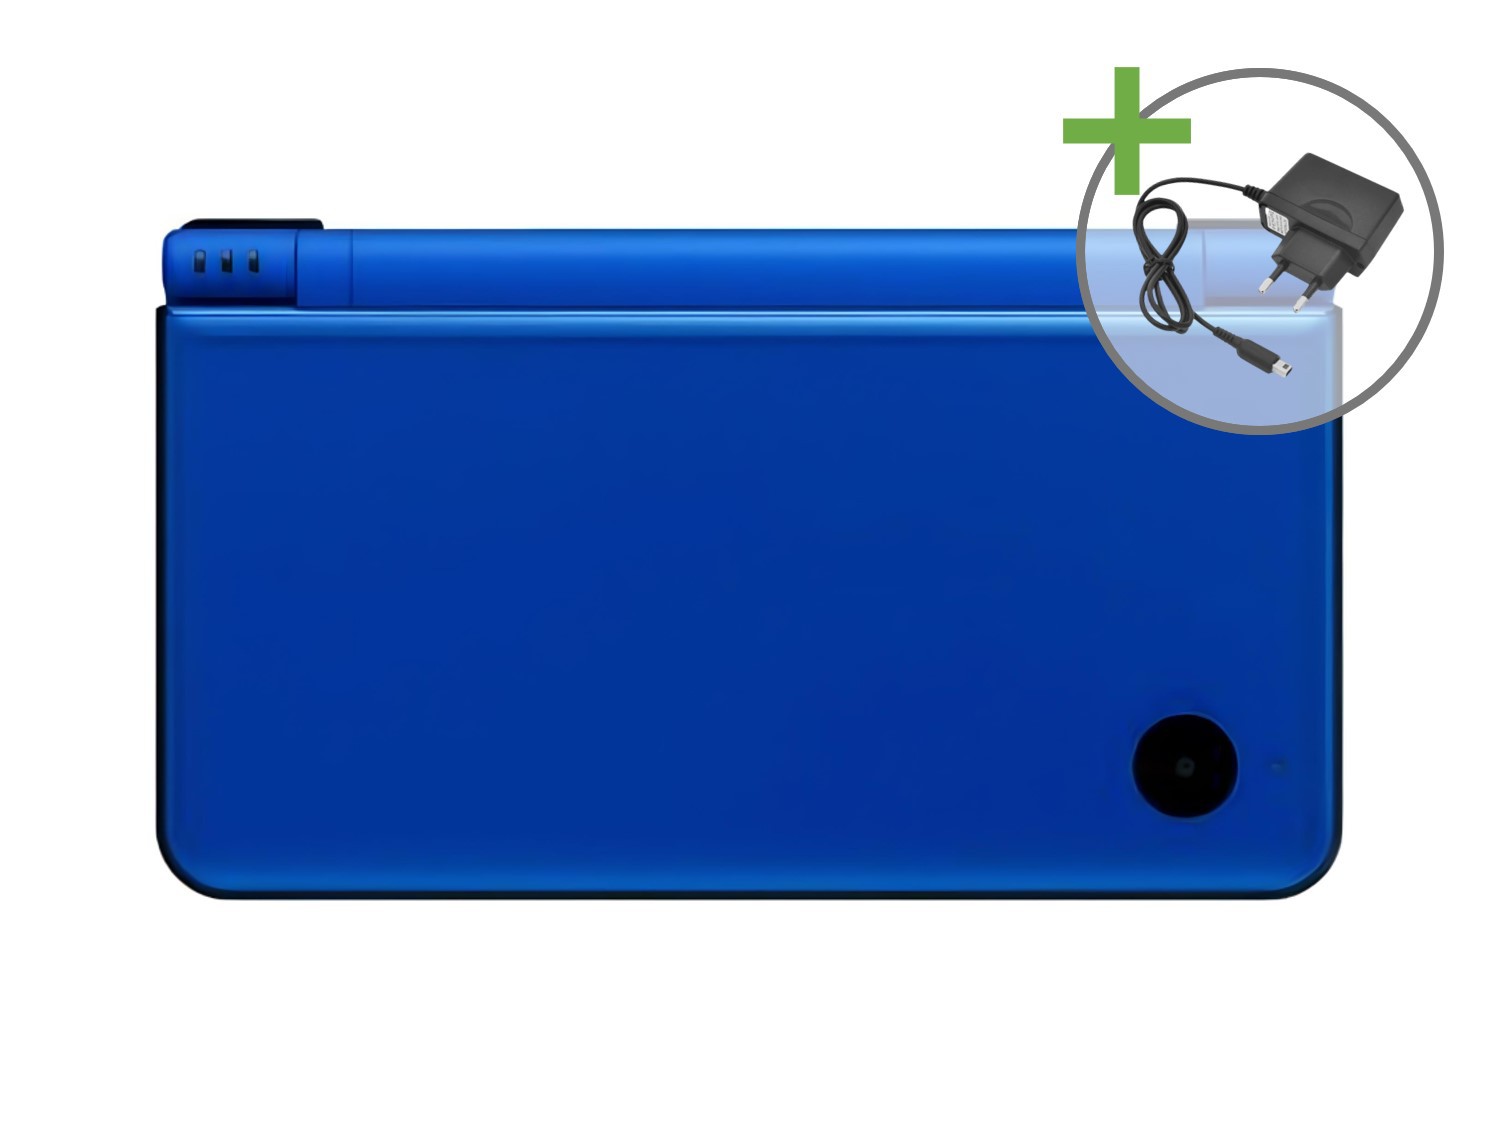 Nintendo DSi XL - Blue [Complete] - Nintendo DS Hardware - 4